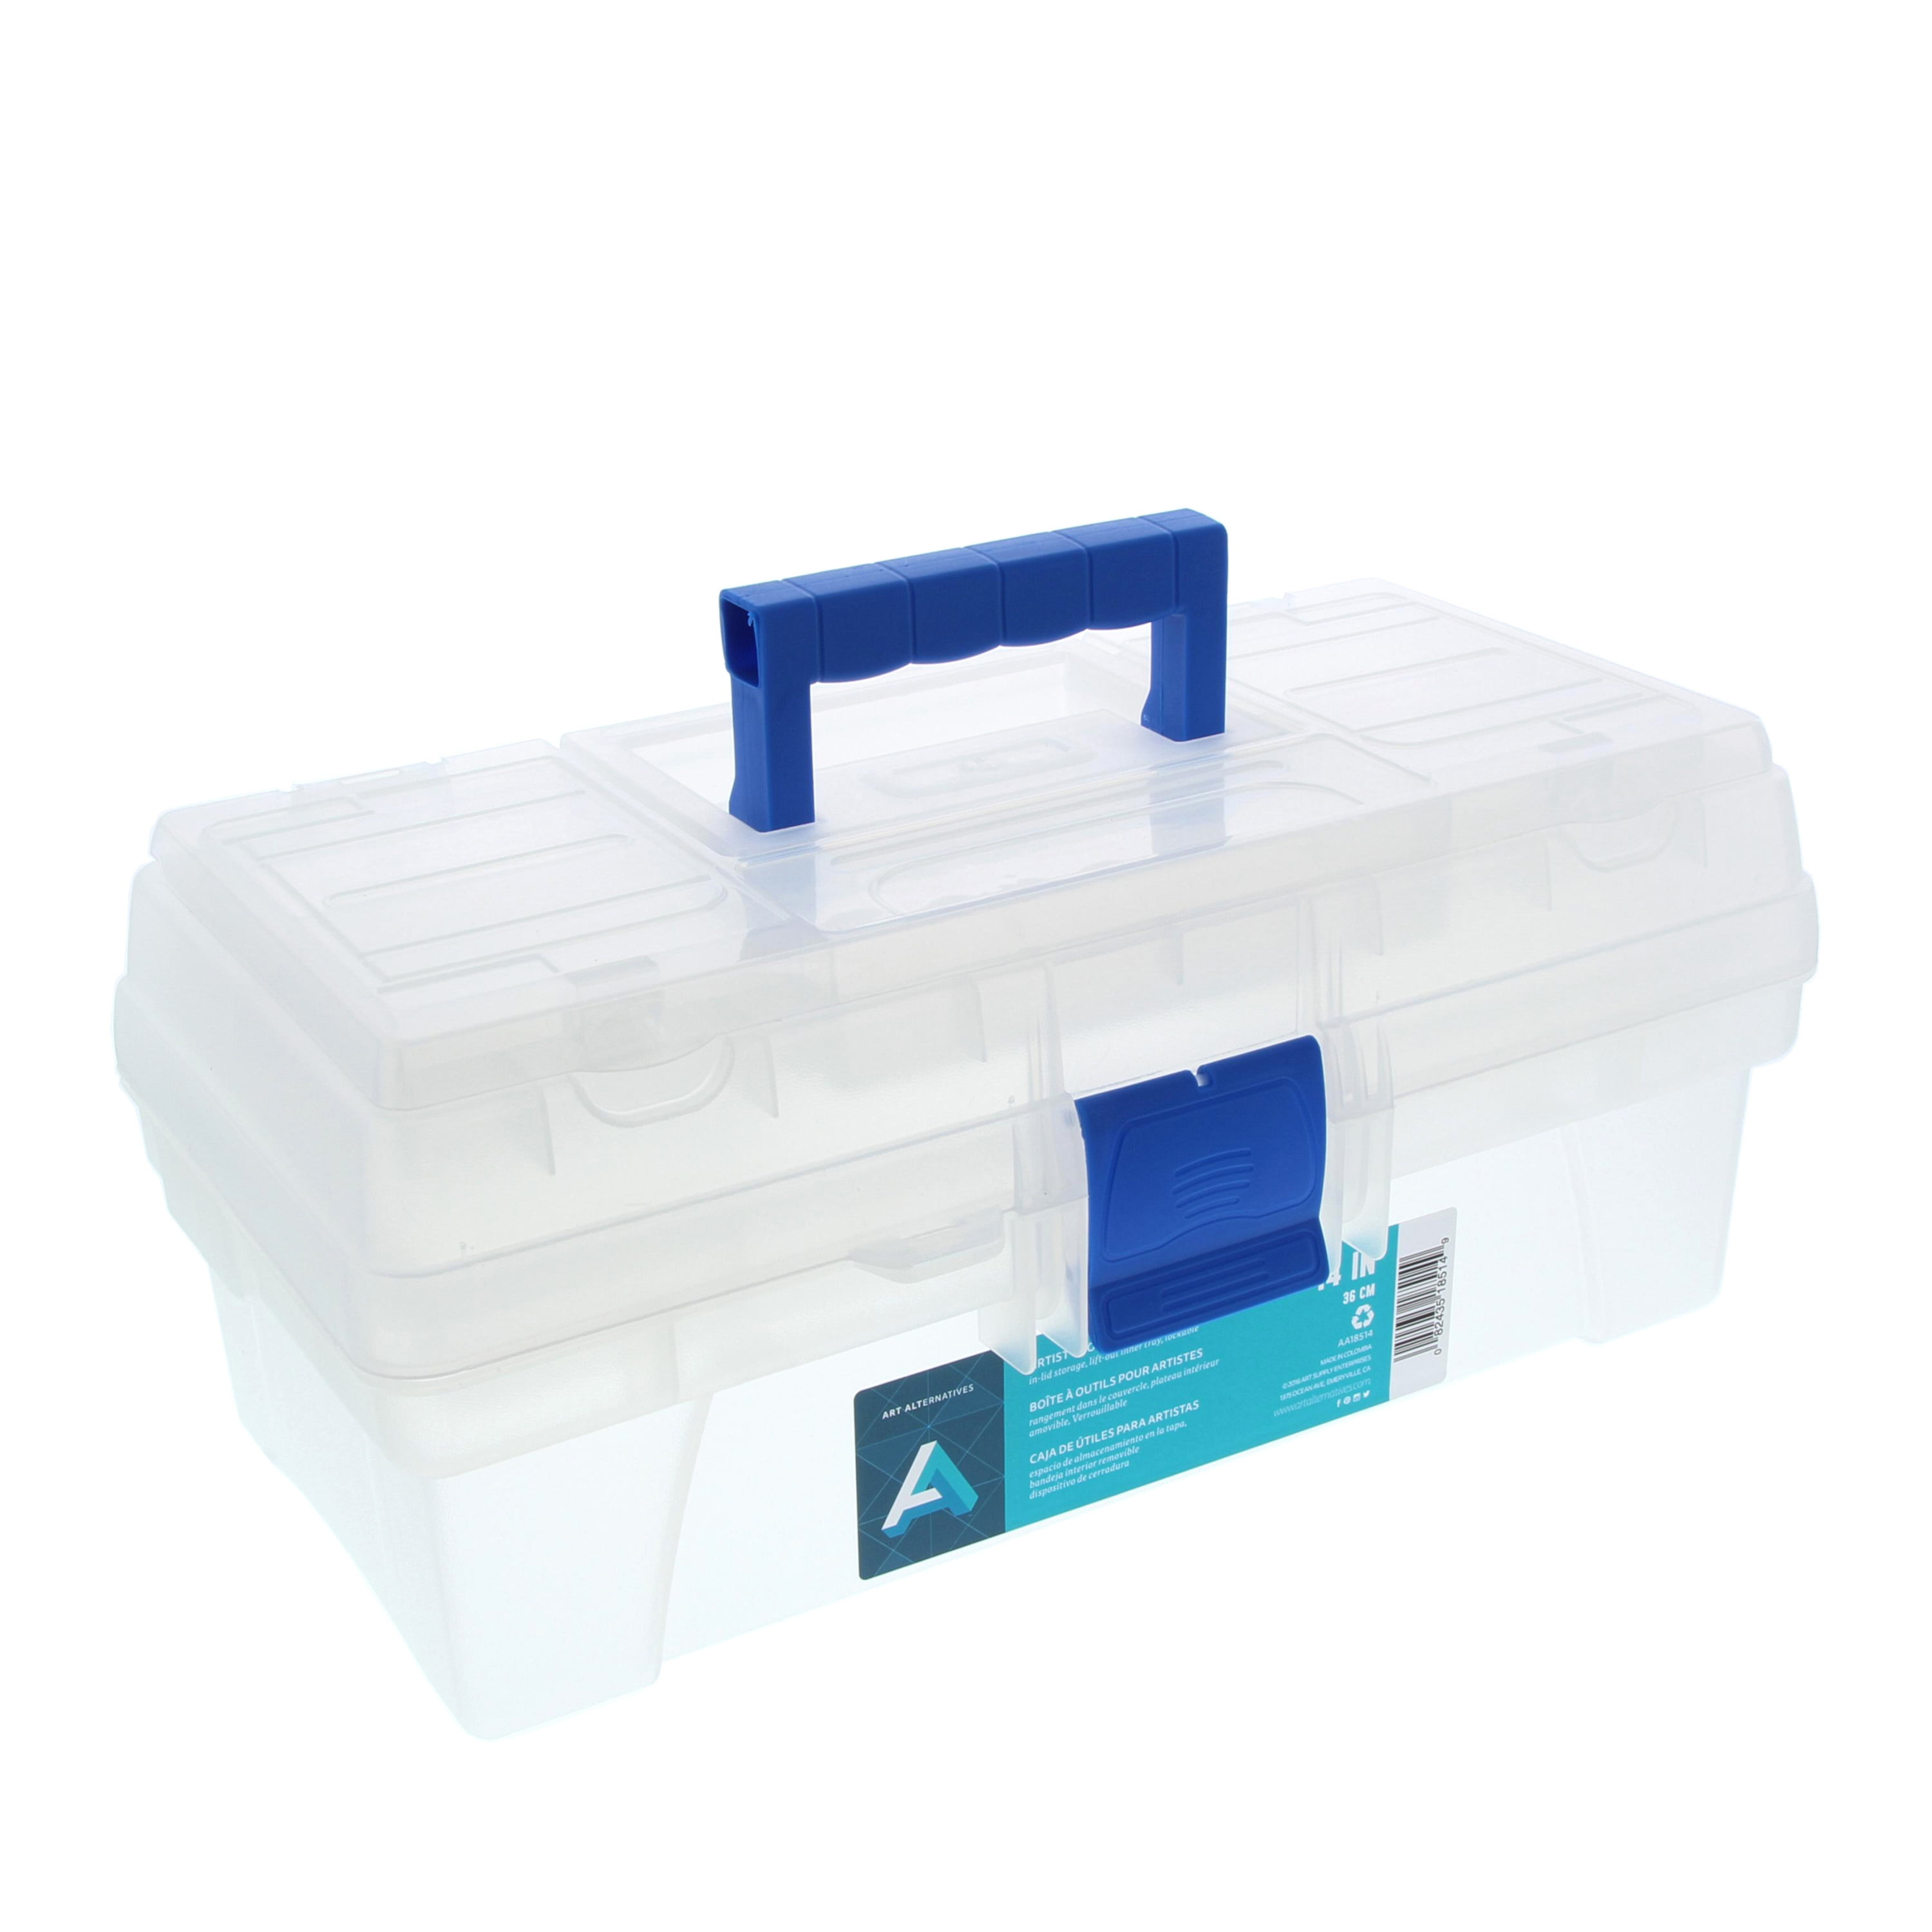 Artist's Large Tool Box Blue Plastic Deep Carry Case Art Pencil Storage Caddy 